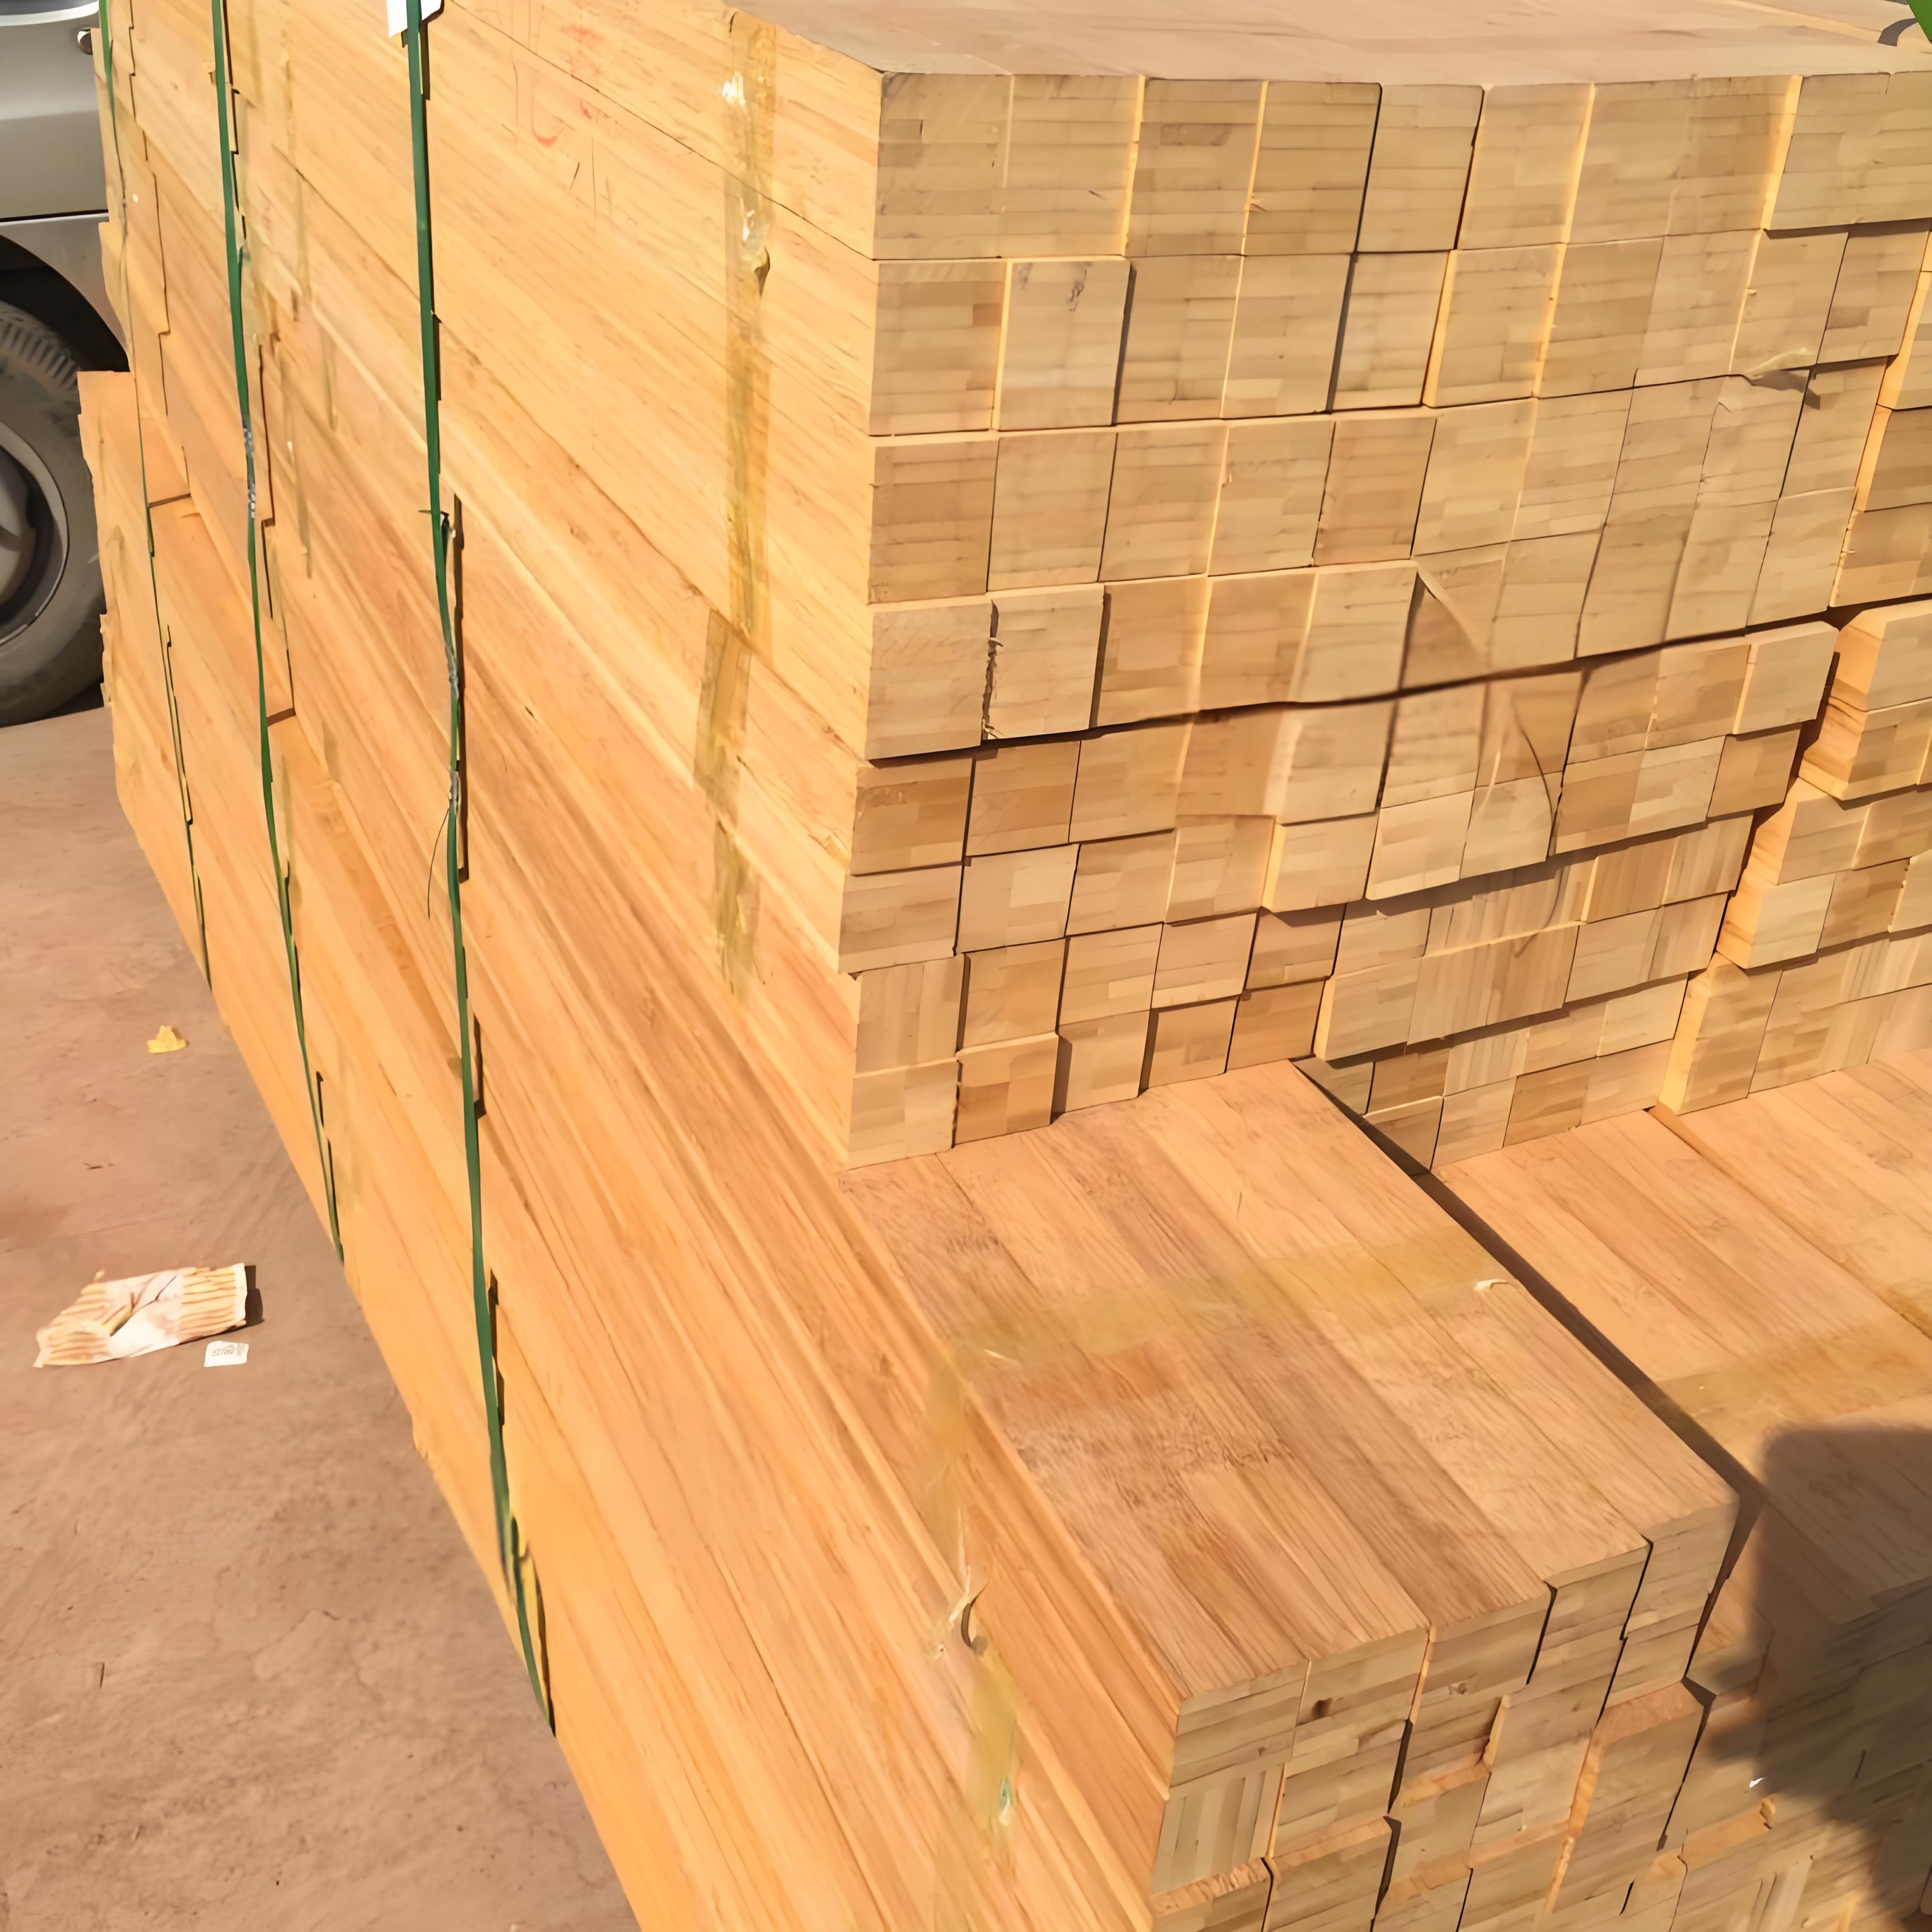 How to make Bamboo lumber?